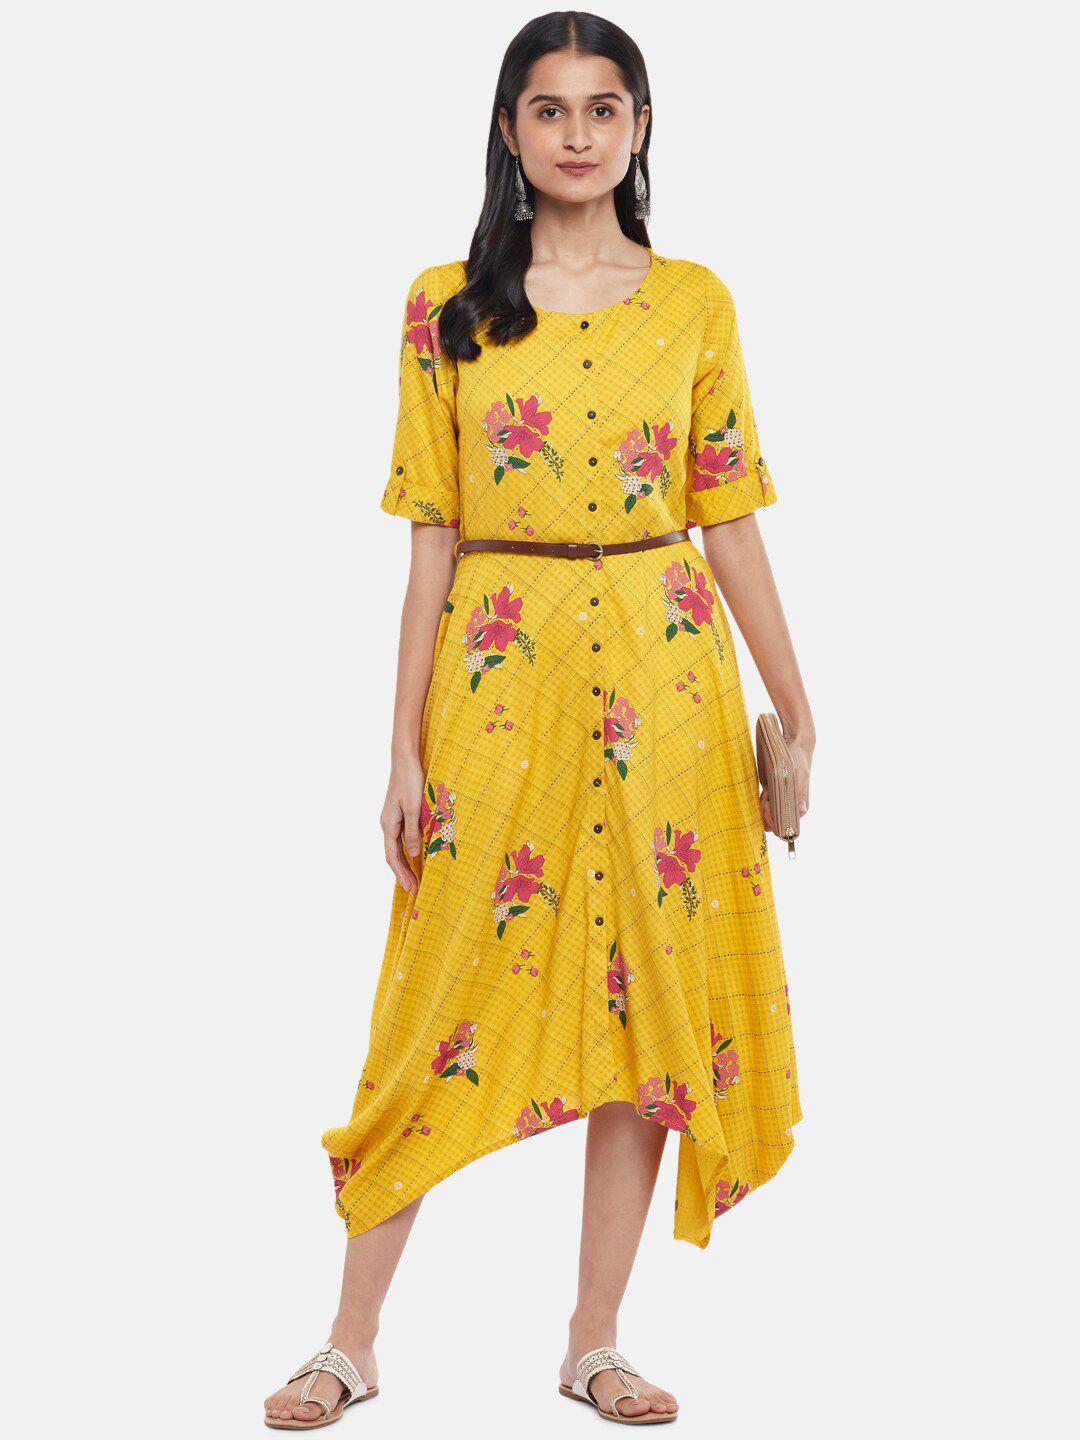 akkriti by pantaloons yellow & red floral midi dress